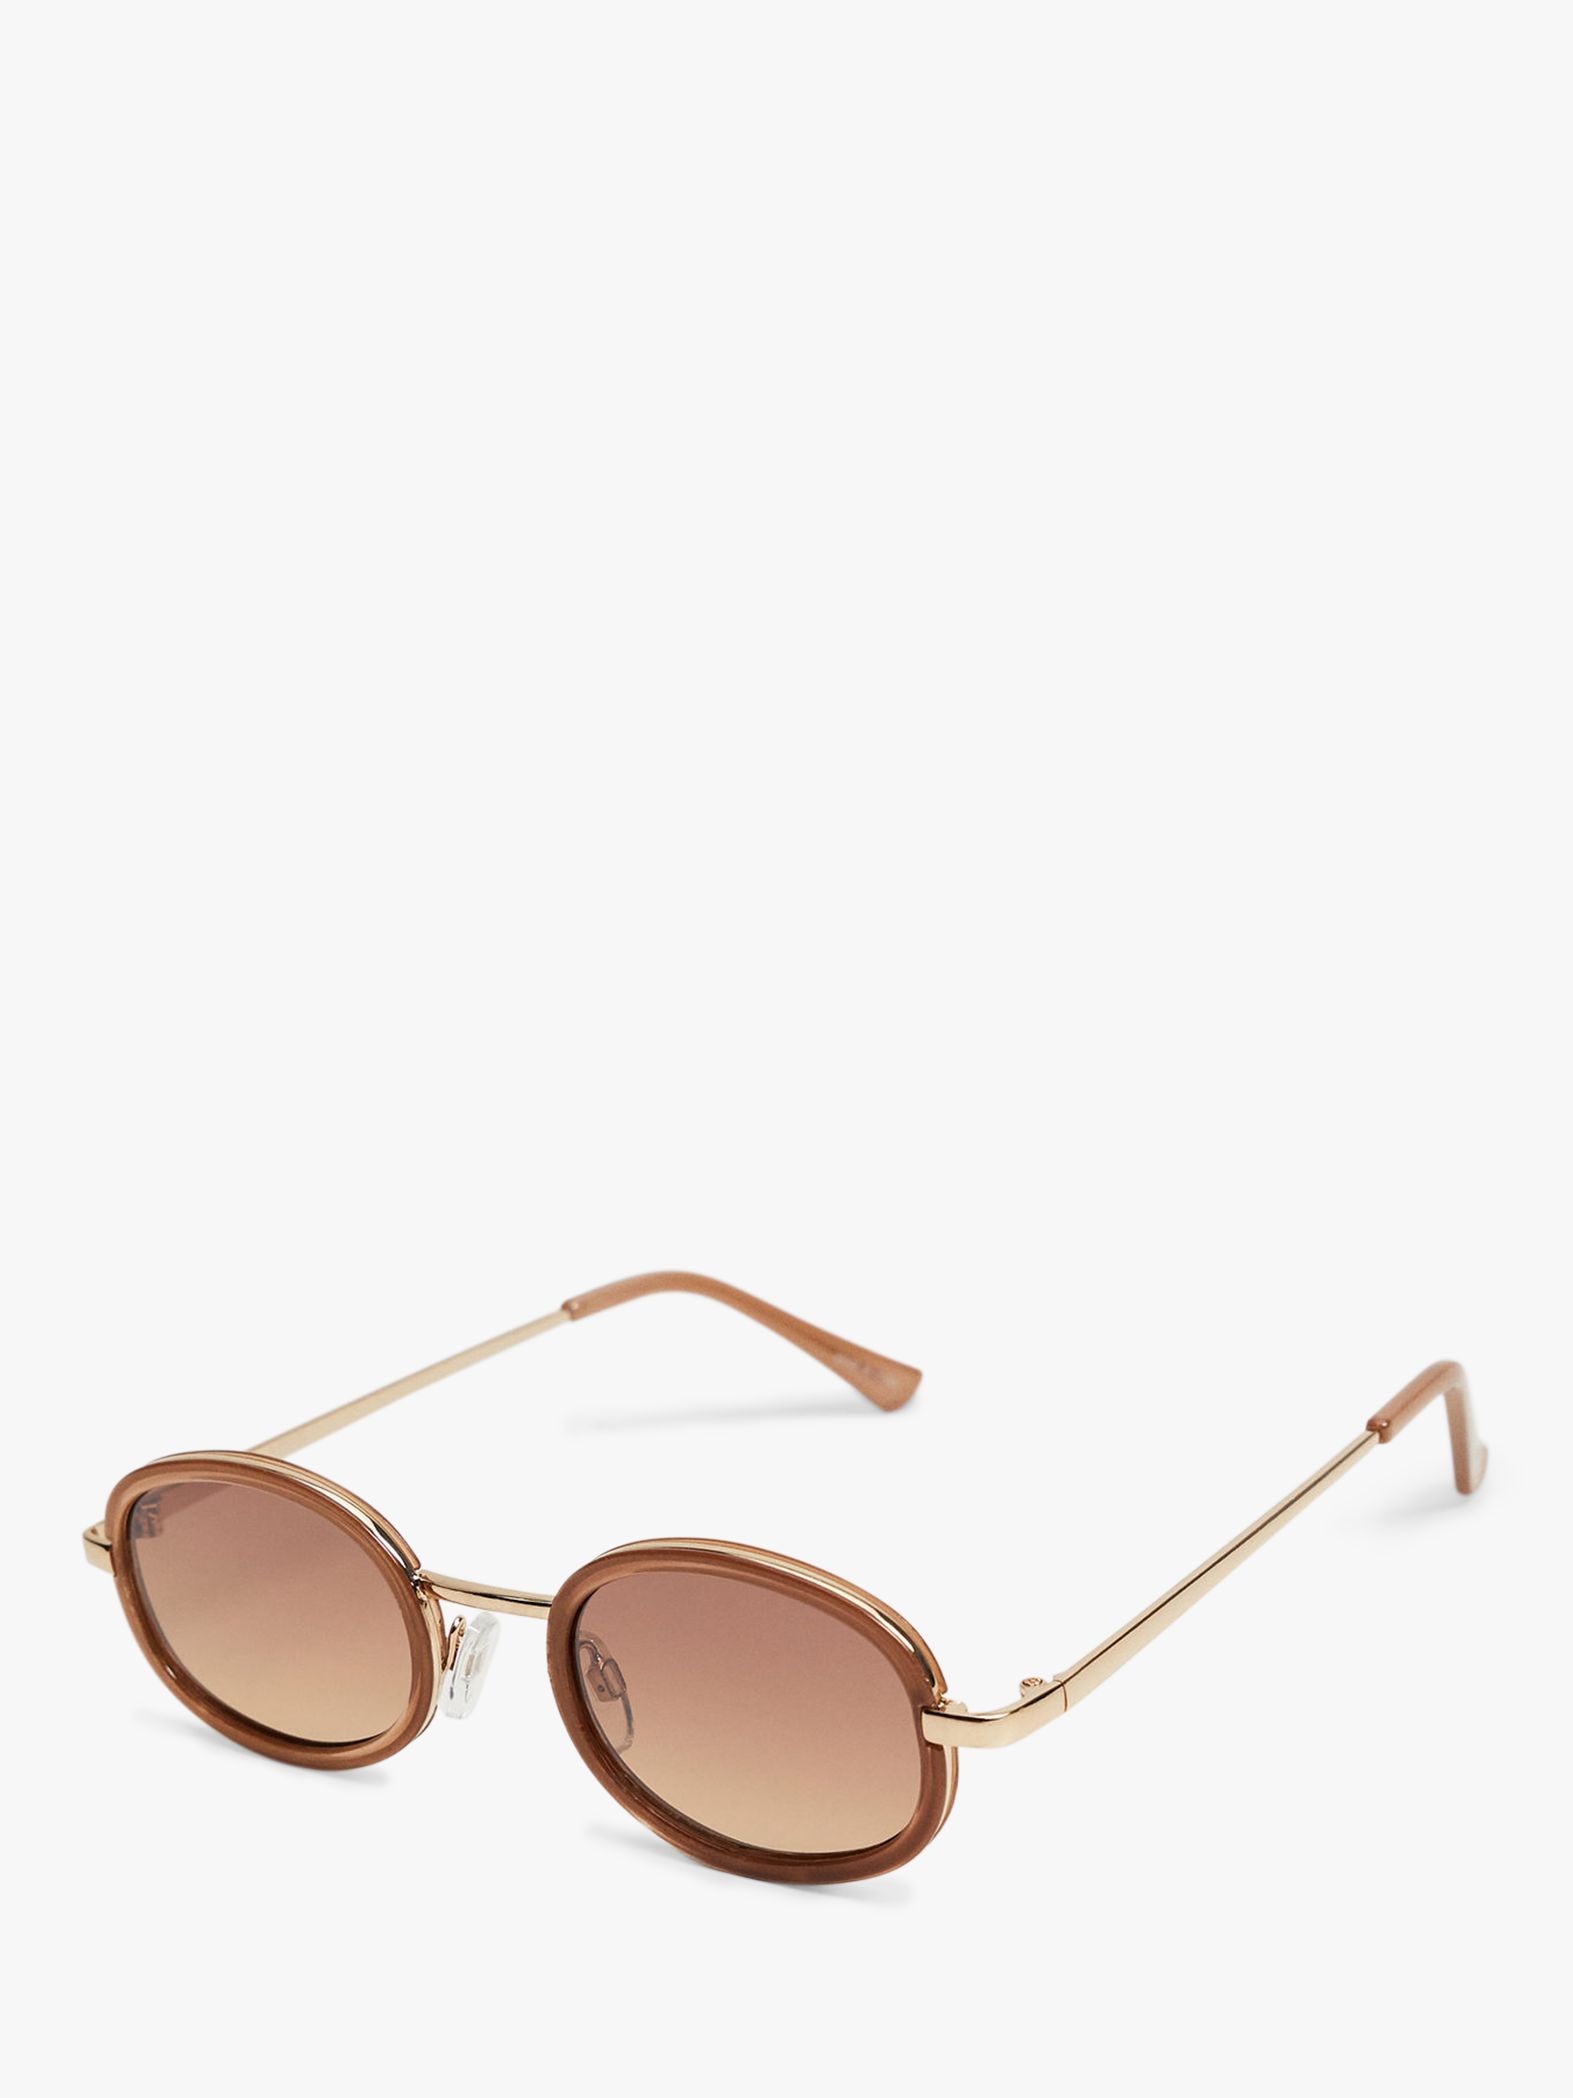 Mango Rounded Frame Sunglasses, Medium Brown